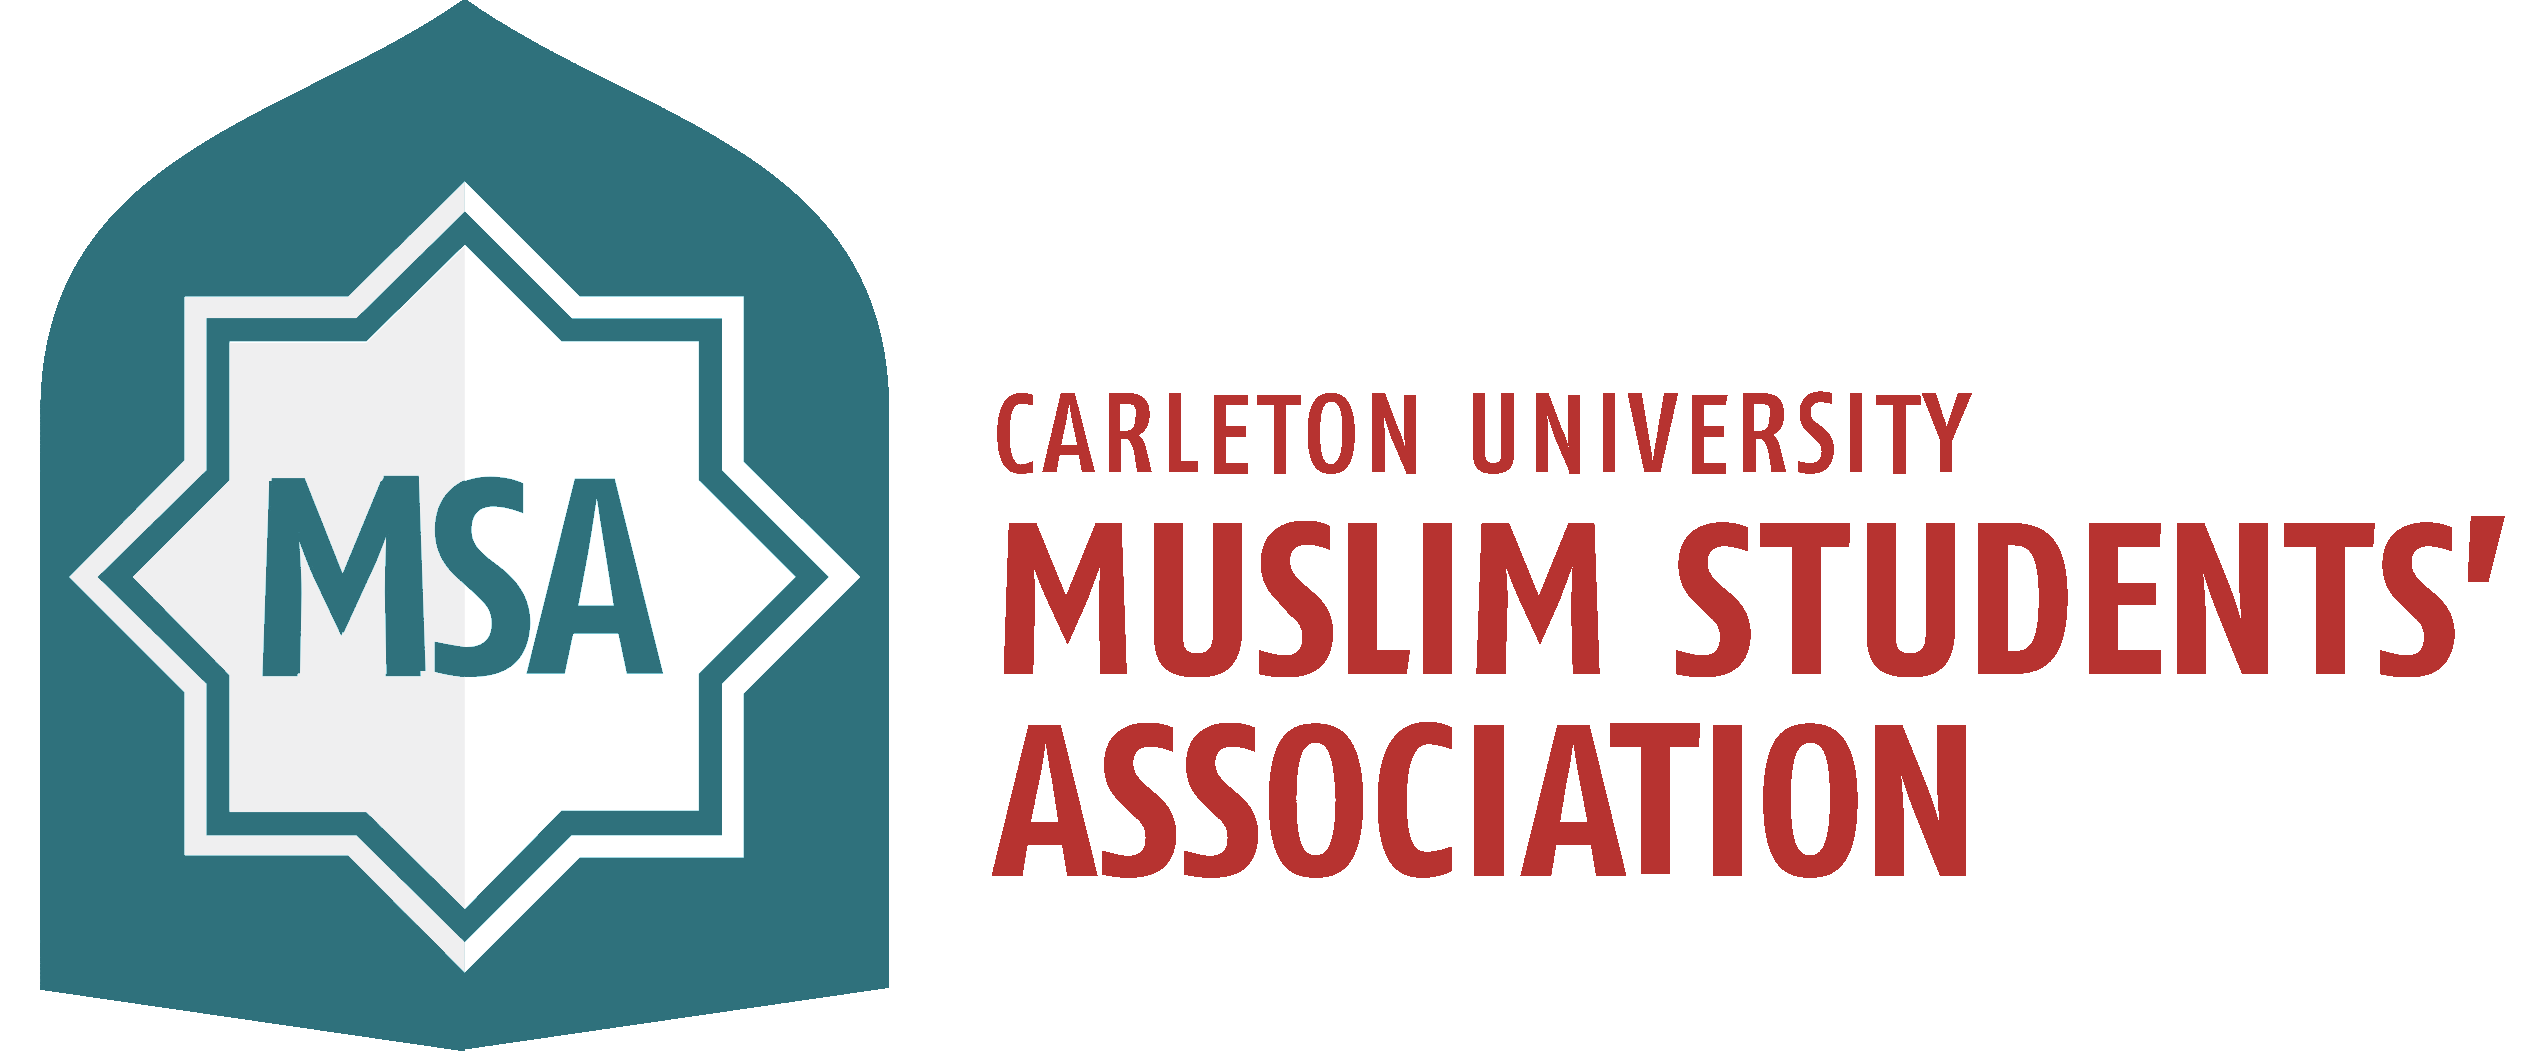 Carleton University Muslim Students' Association